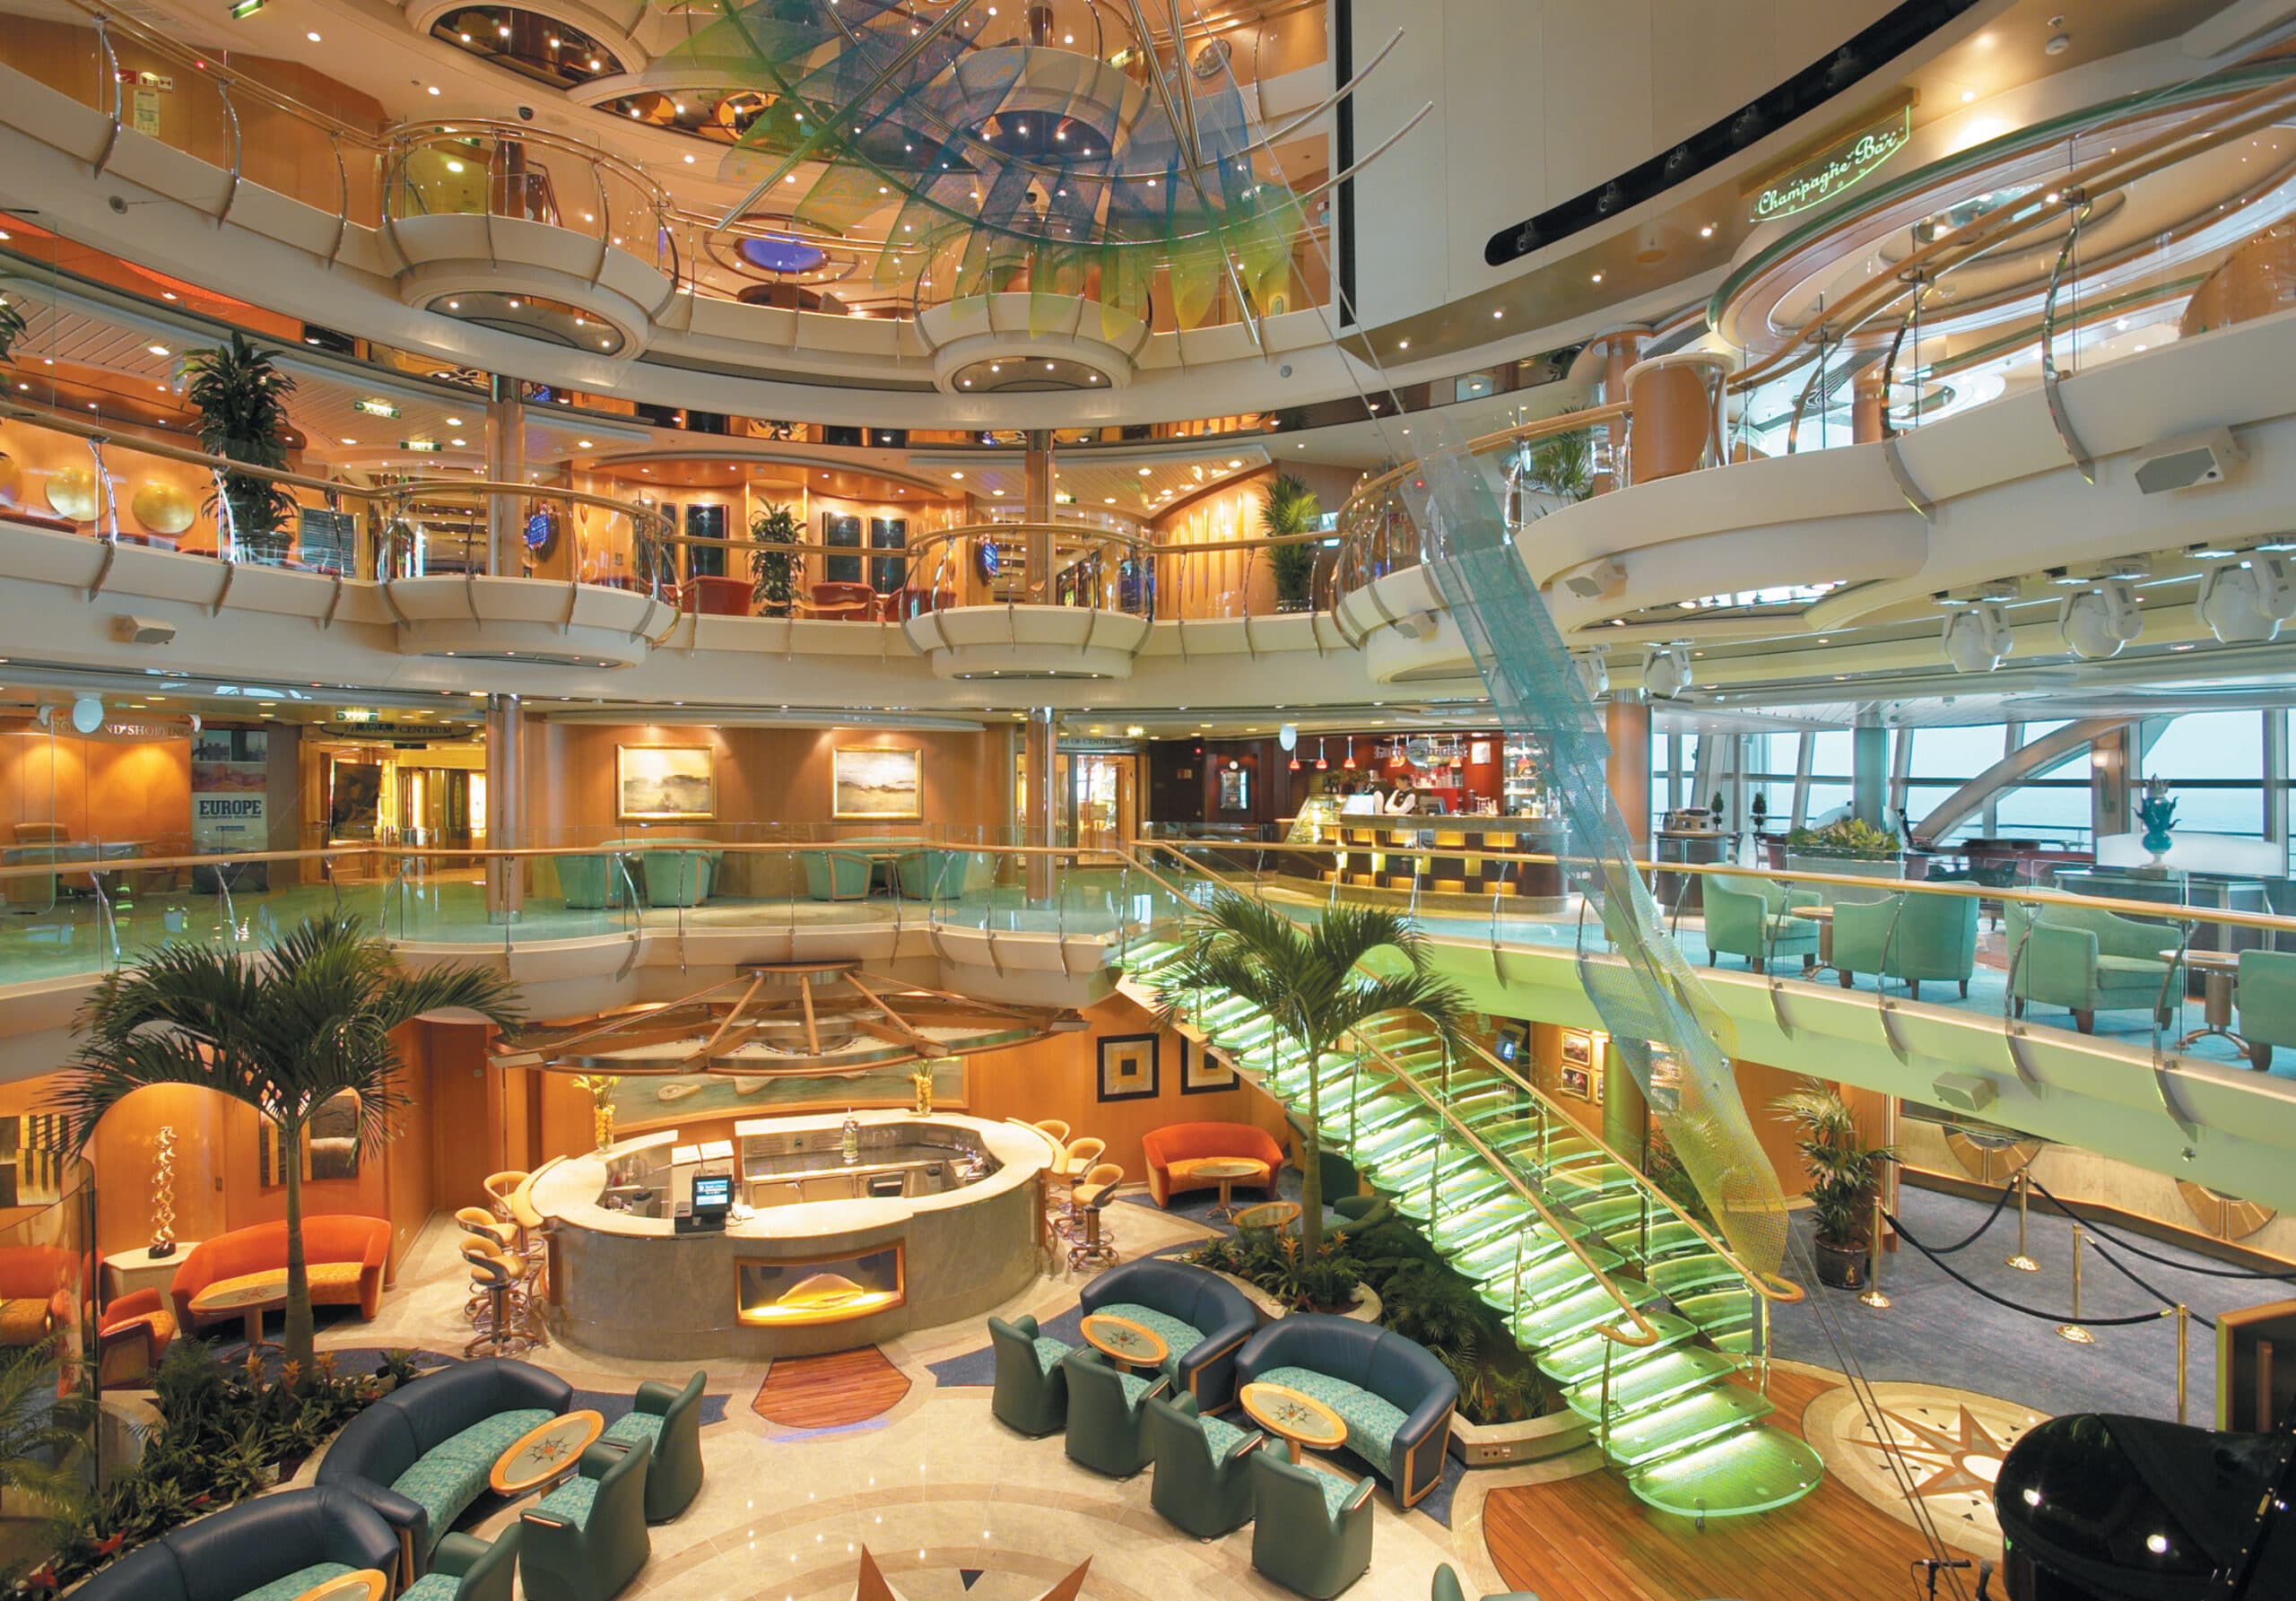 Cruiseschip-Radiance of the Seas-Royal Caribbean International-Atrium